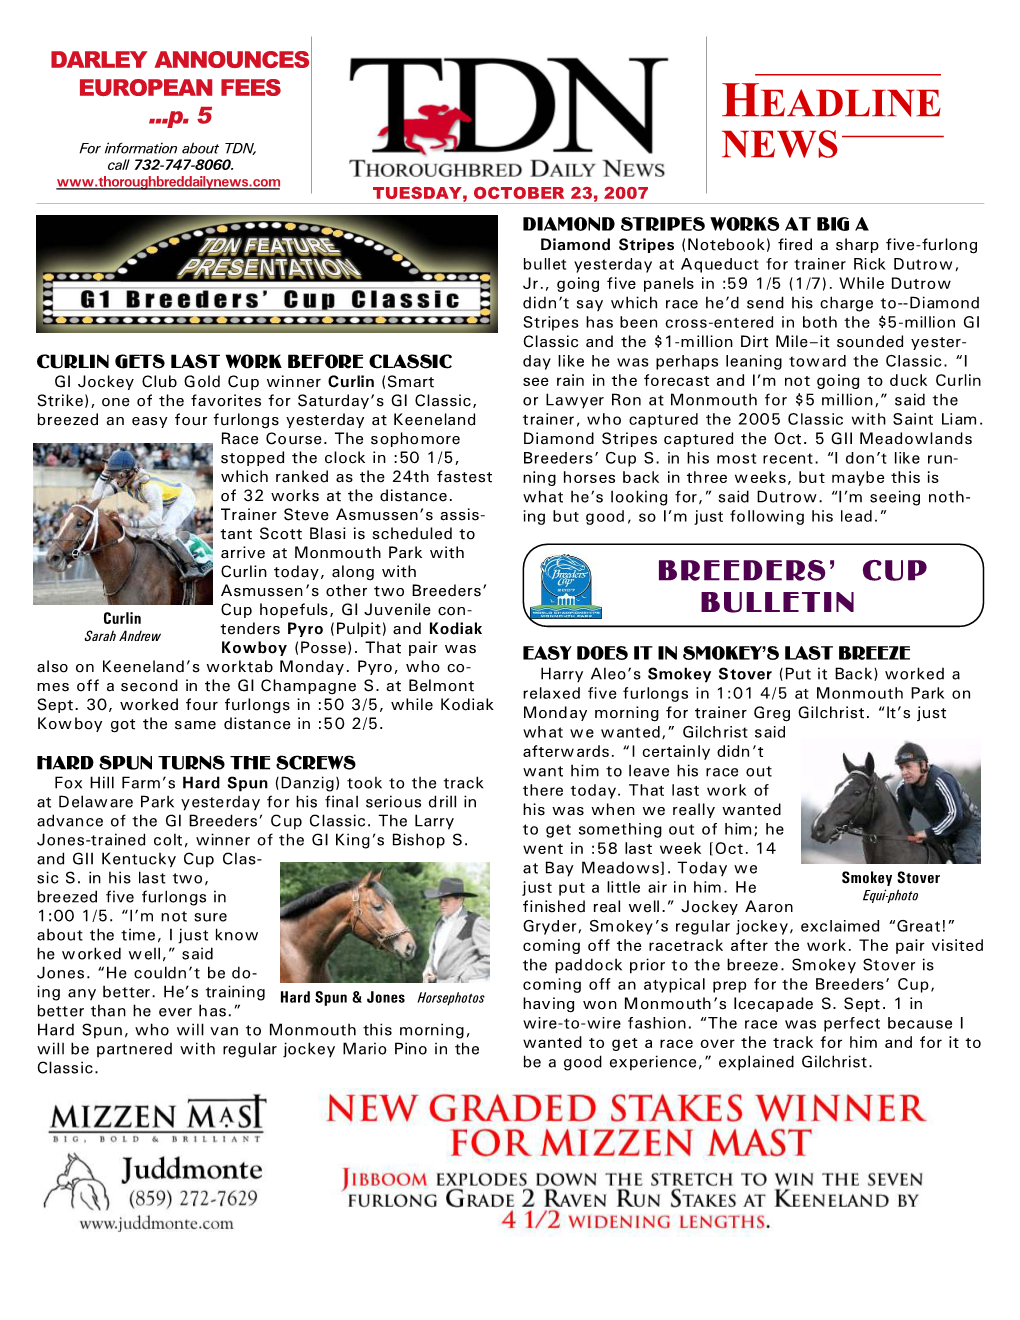 HEADLINE NEWS • 10/23/07 • PAGE 2 of 10